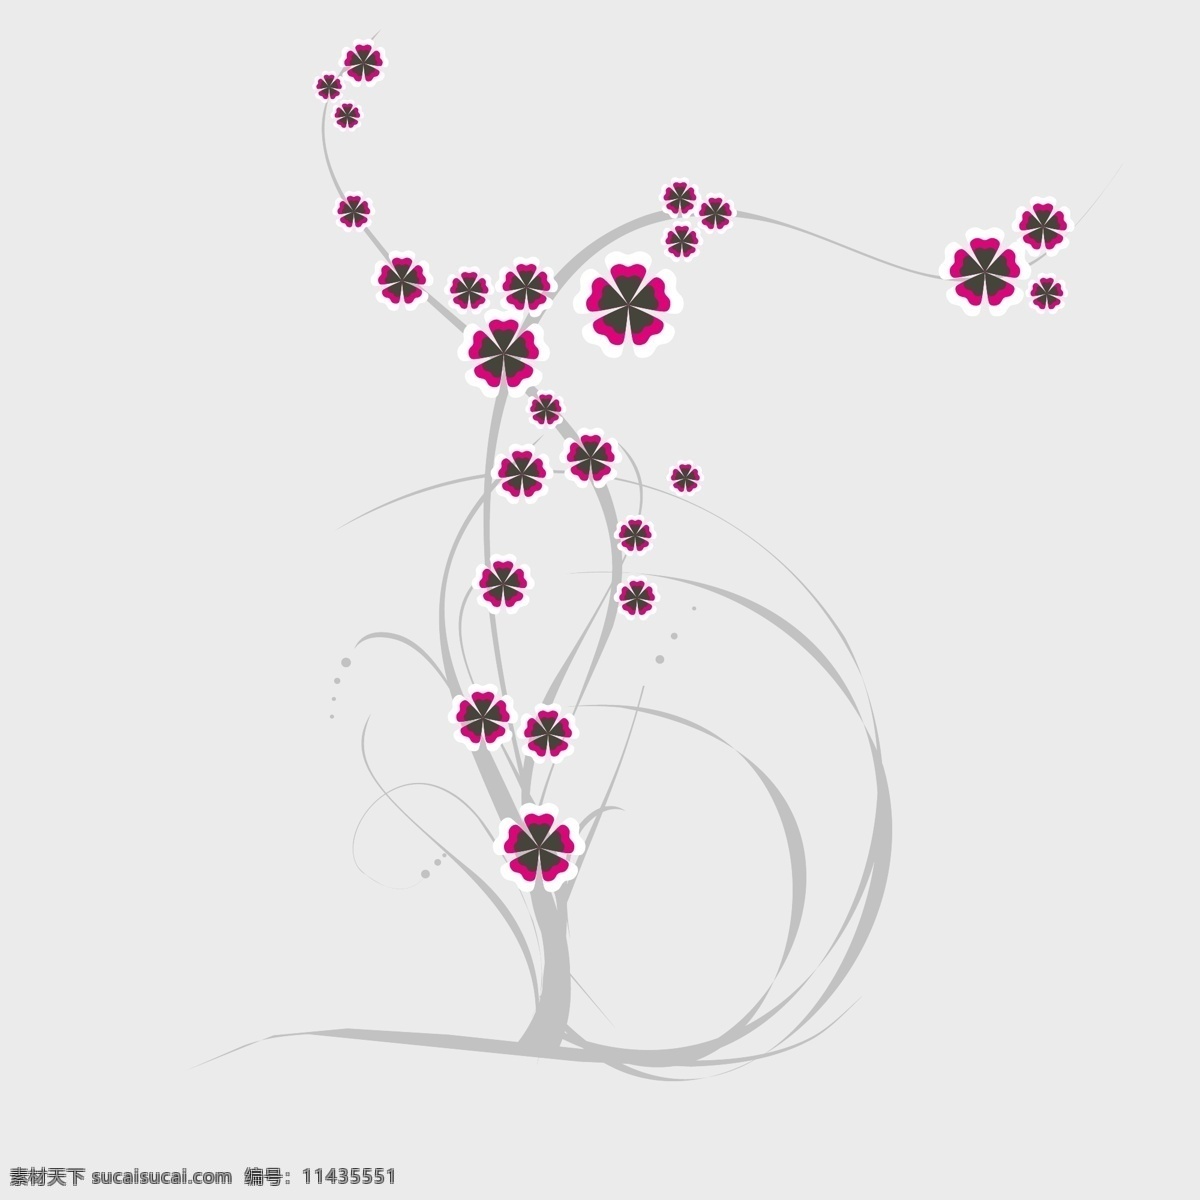 eps格式 花纹底图 时尚 实用 蝴蝶兰 花朵 花纹 清淡 树枝 心形 浅灰底色 矢量图 花纹花边